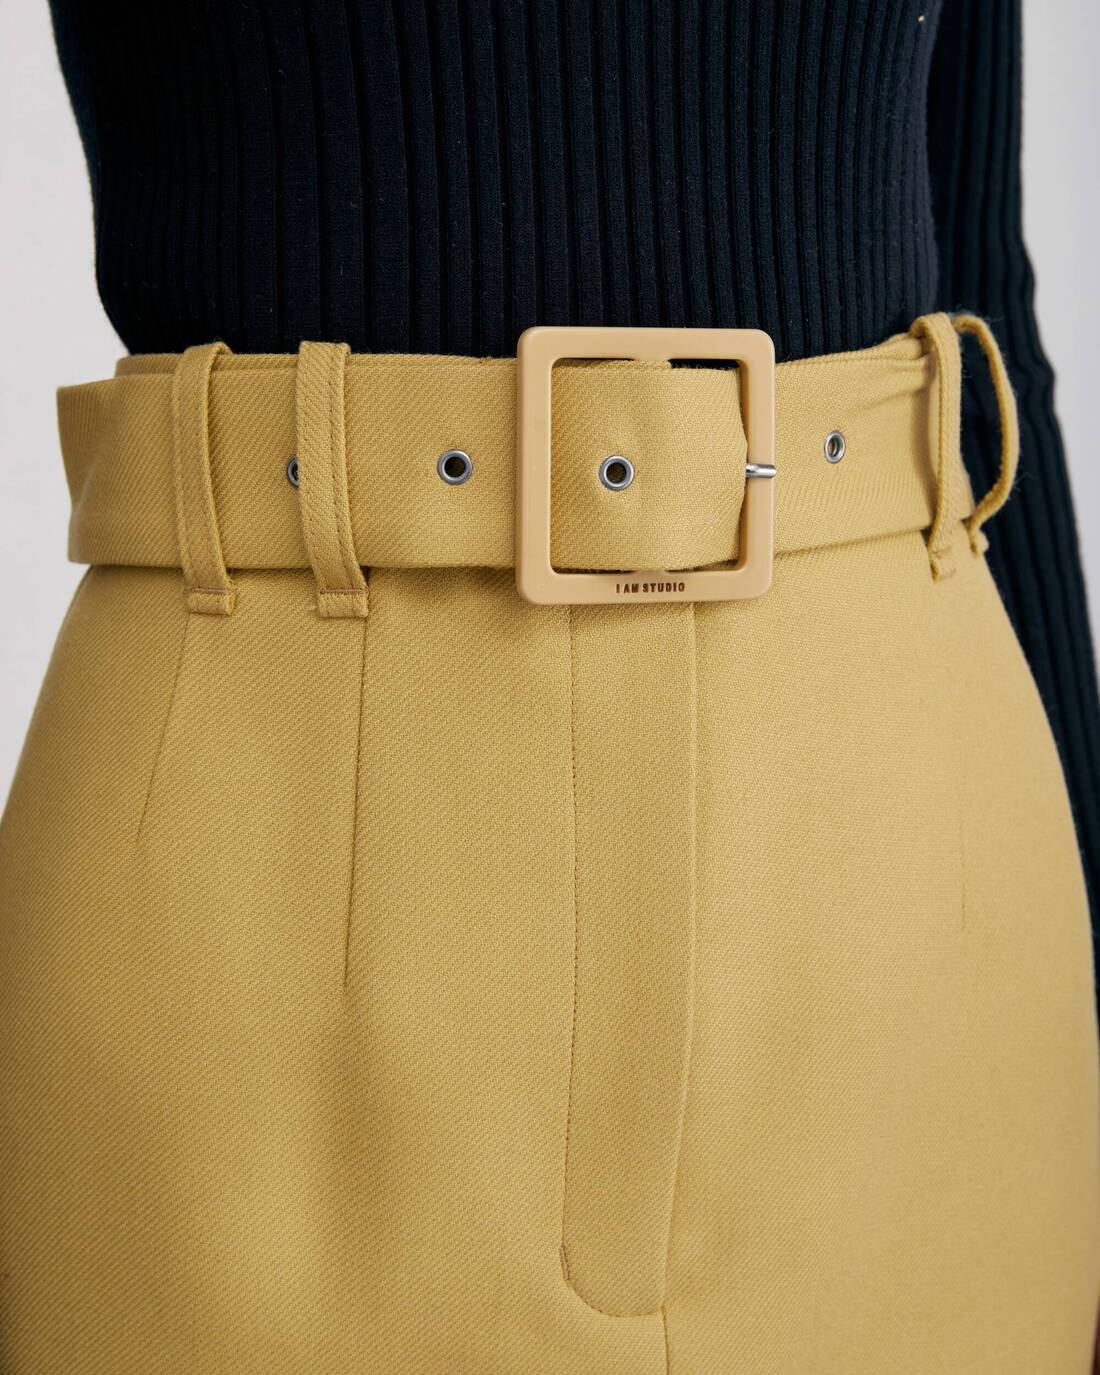 Mini skirt with a belt 